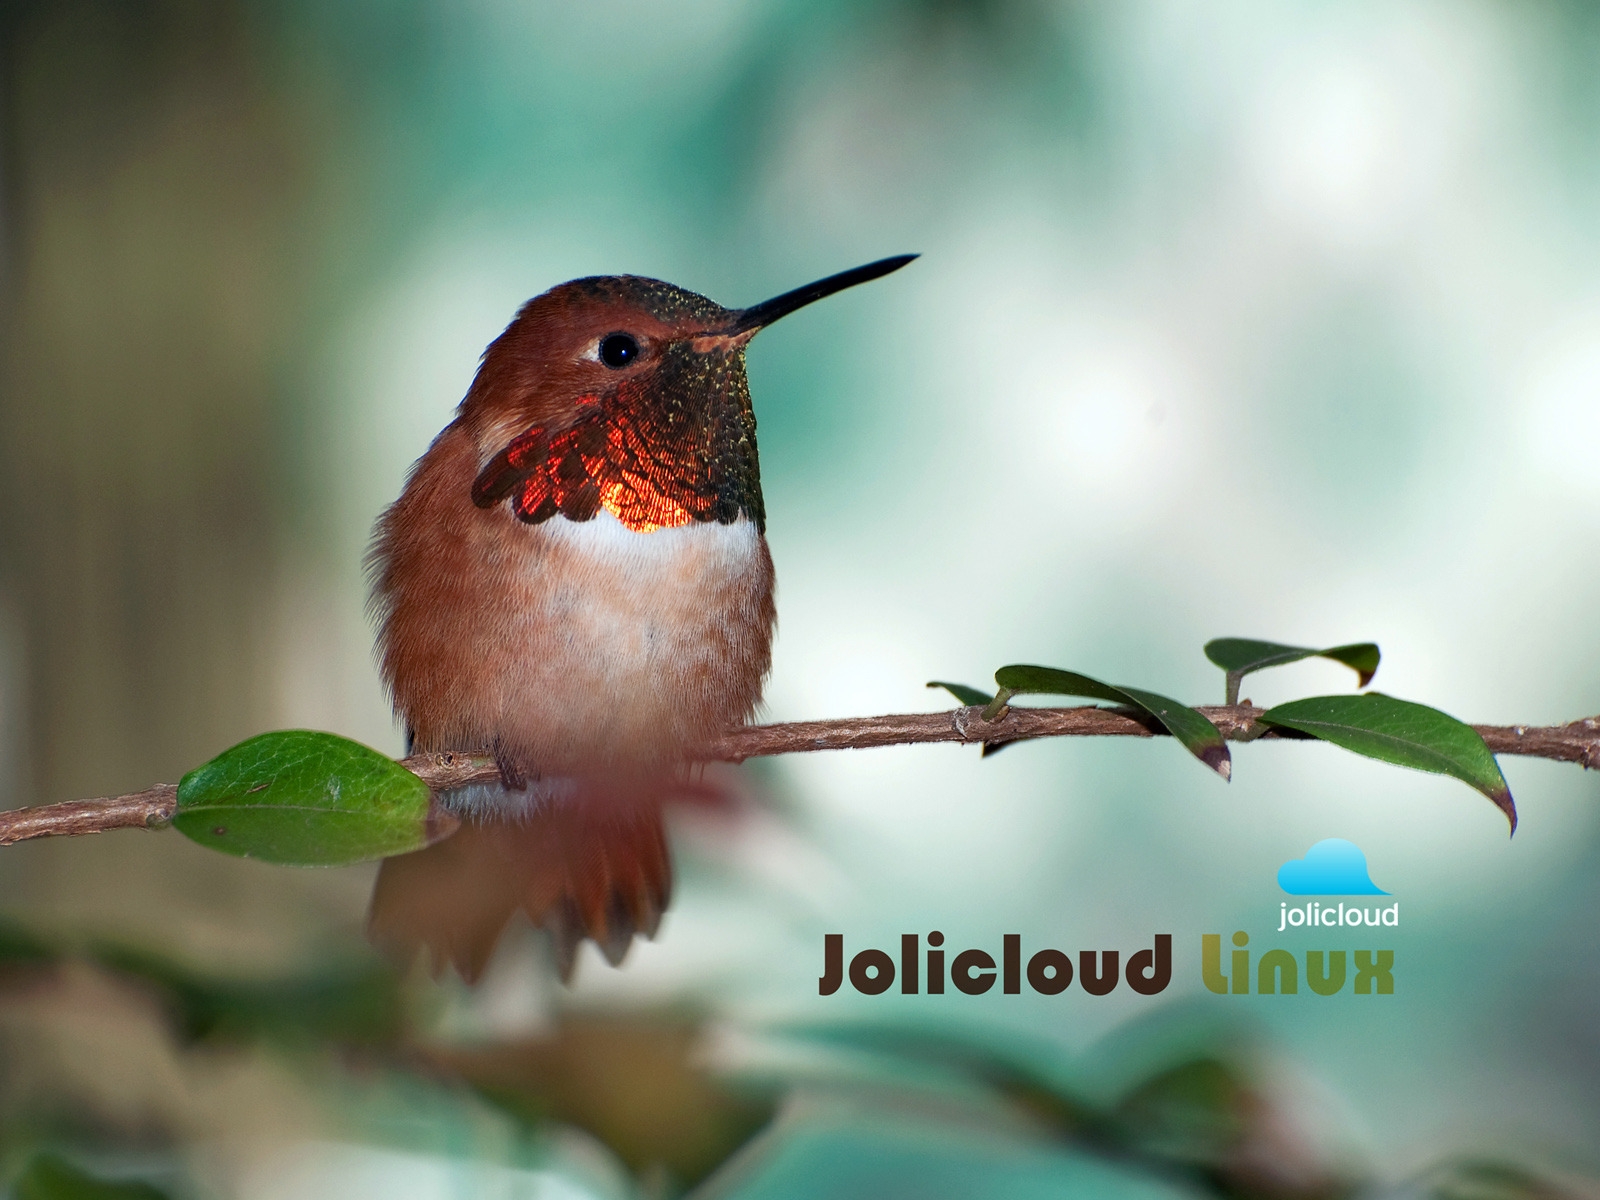 Jolicloud Linux Hummingbird for 1600 x 1200 resolution